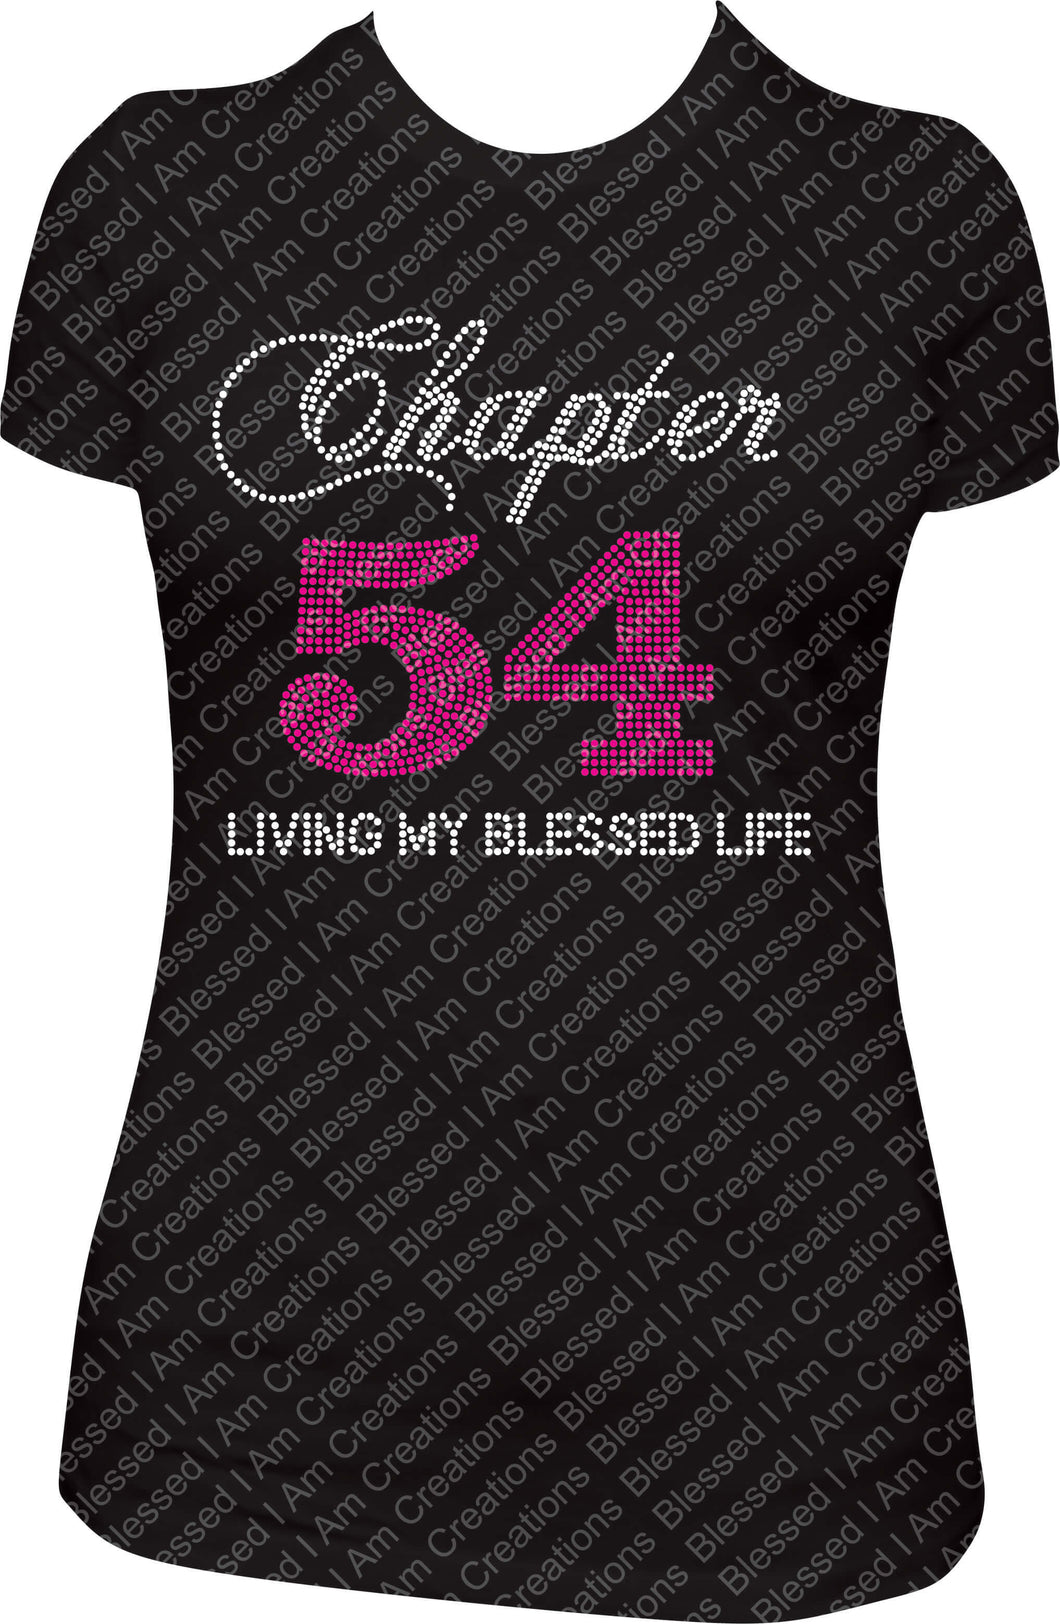 Chapter 54 rhinestone shirt, bling shirt, rhinestone shirt, living my blessed life shirt, chapter birthday shirt, 54th Birthday shirt